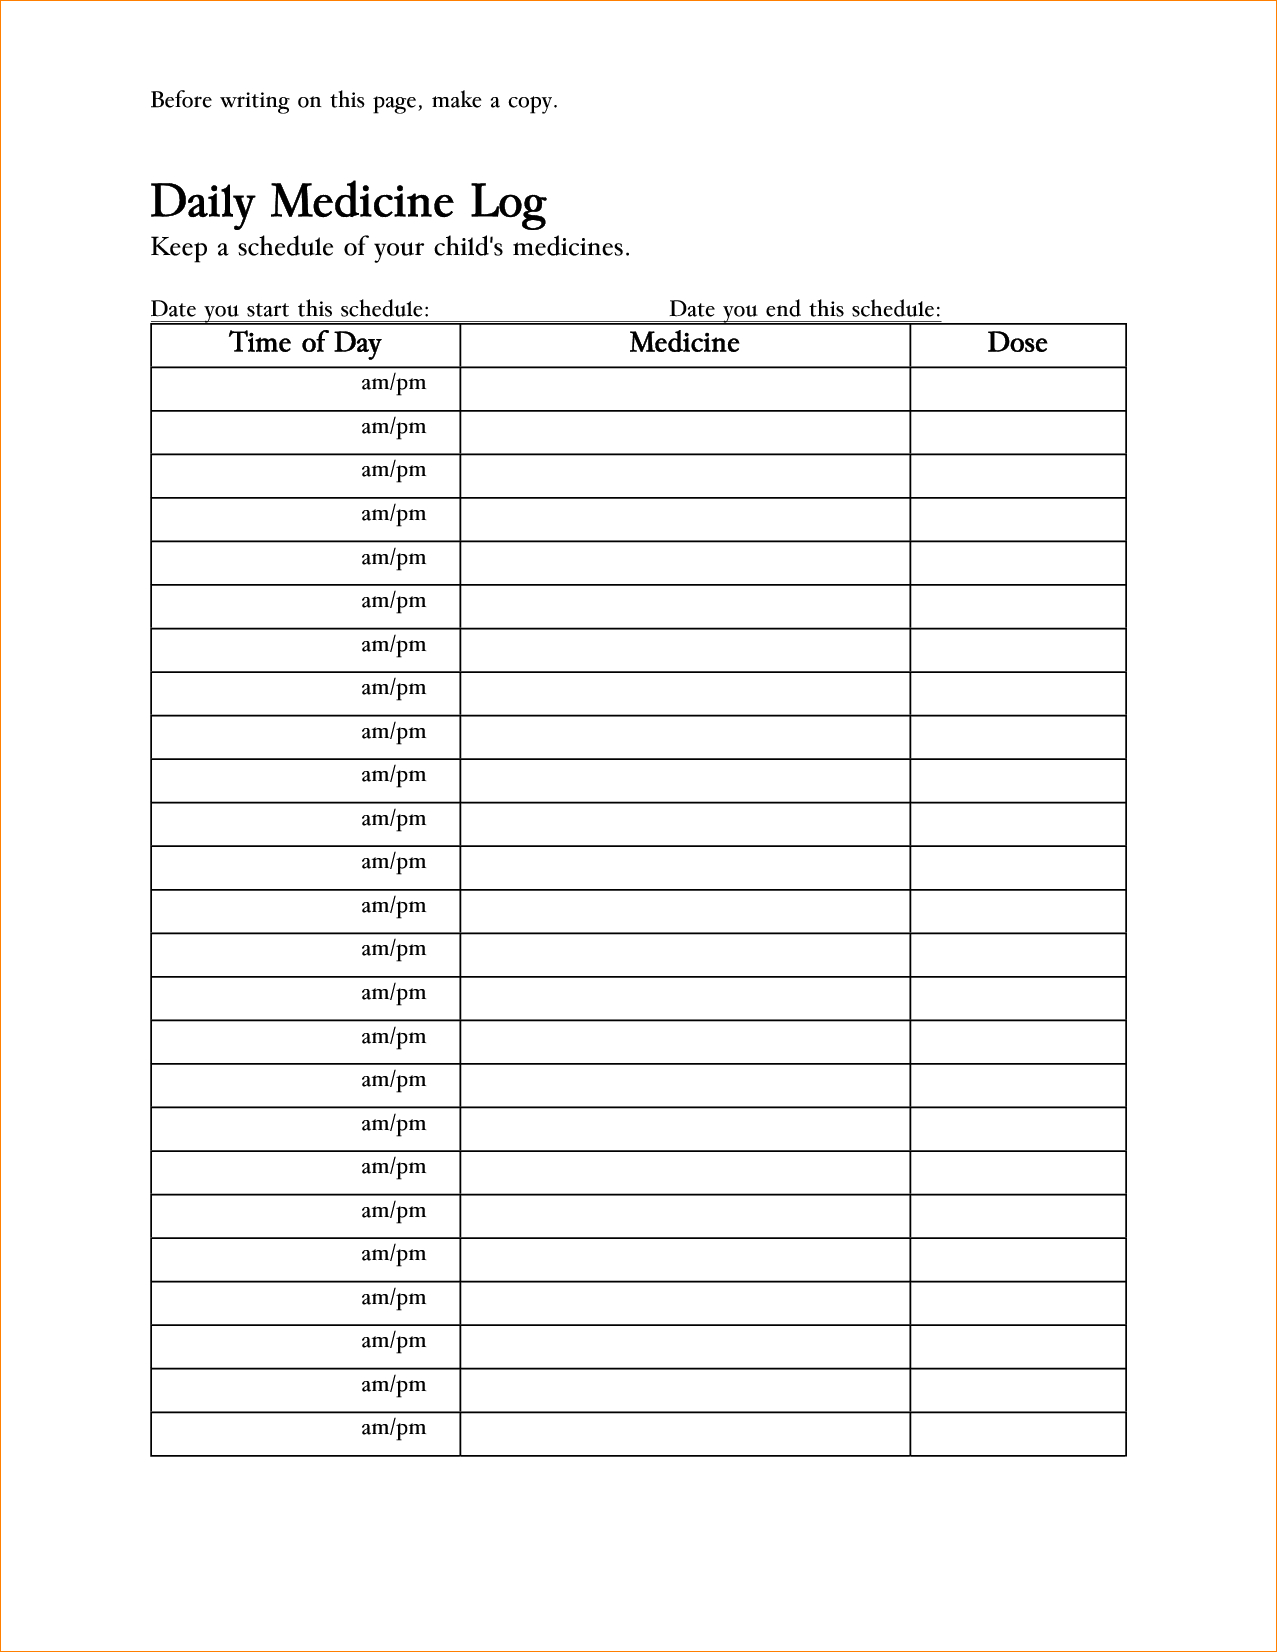 Free Medication Administration Record Template Excel - Yahoo Image - Free Printable Medication Log